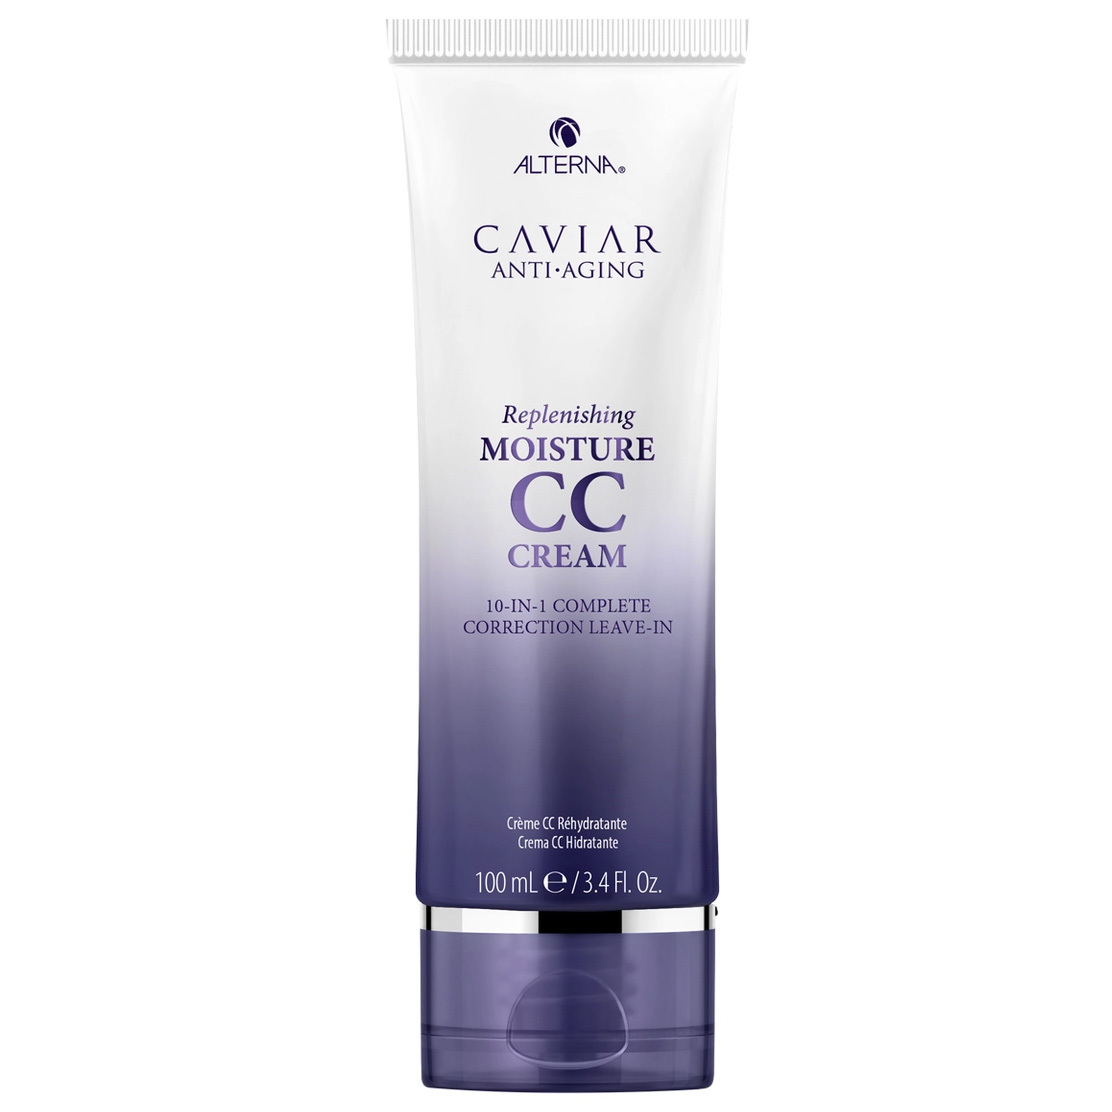 Alterna Caviar Anti-Aging Replenishing Moisture CC Cream 3.4oz